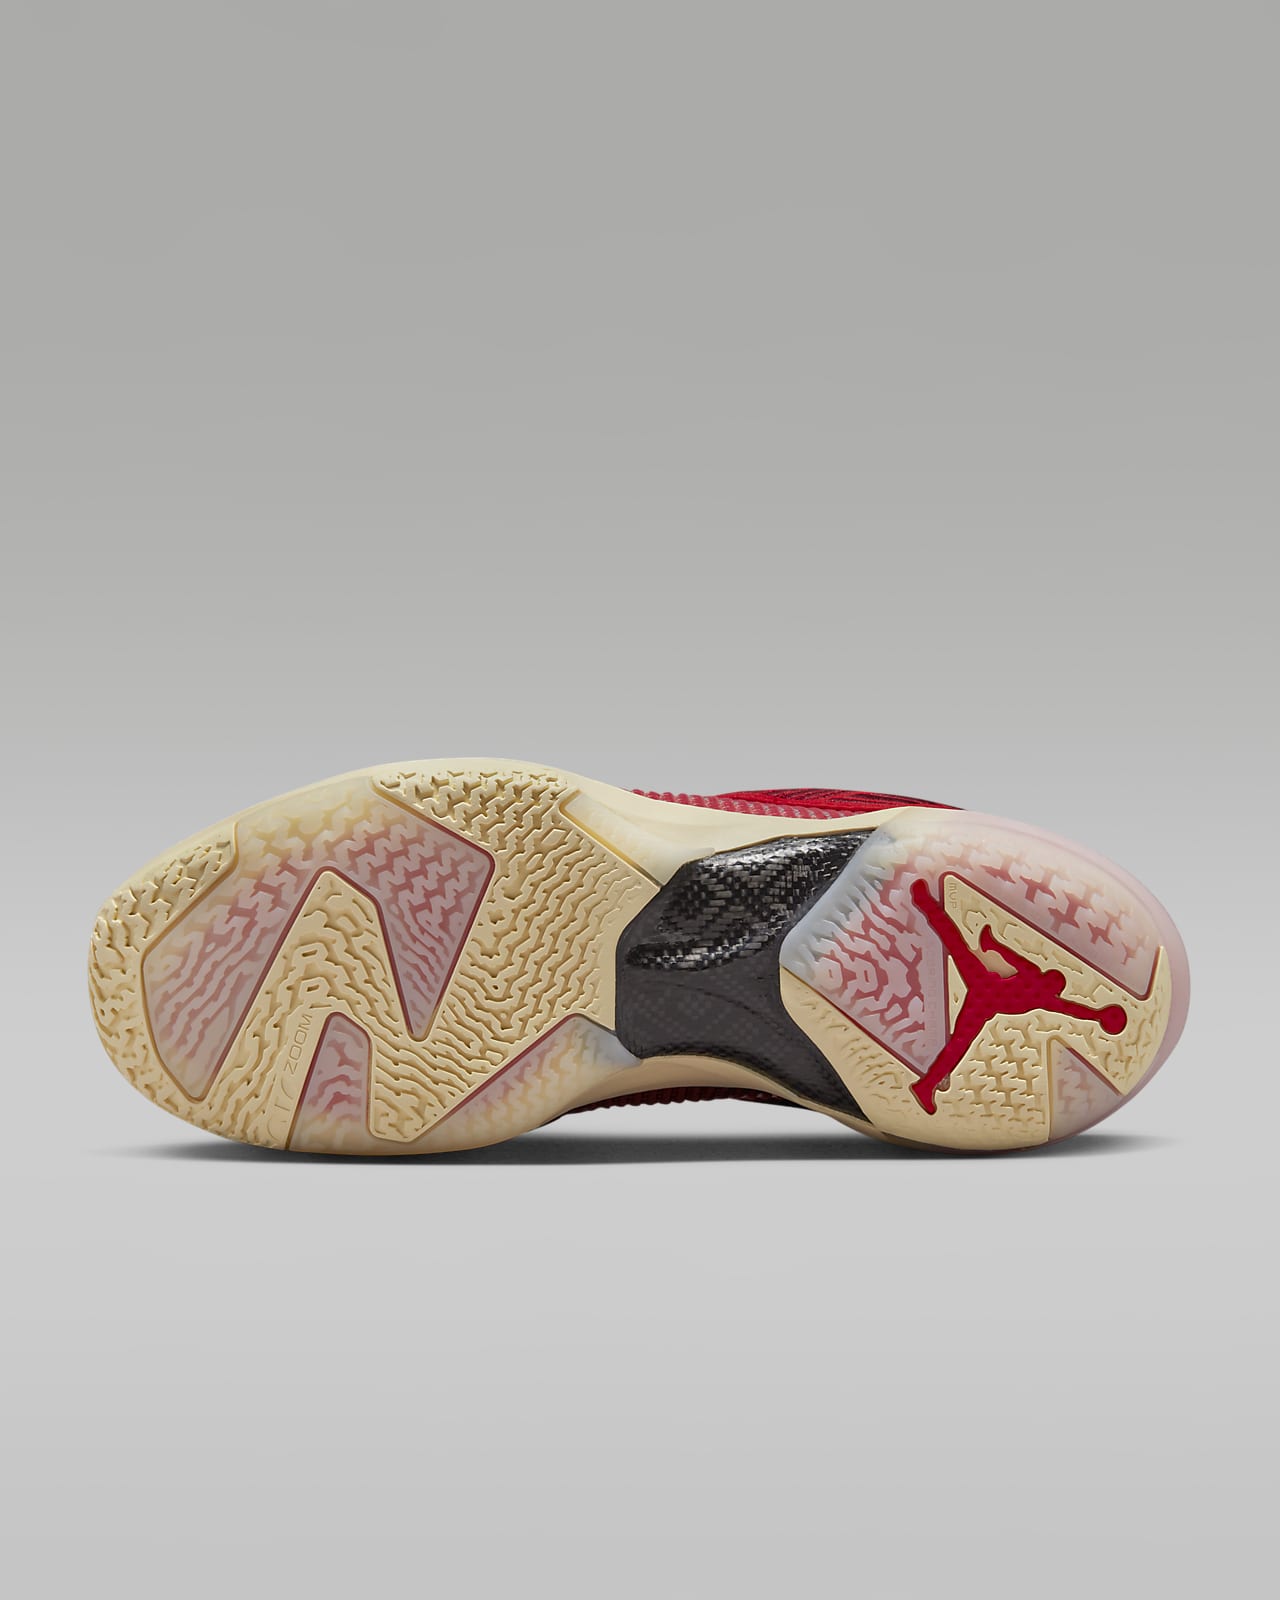 Air Jordan XXXVII Low Women's Basketball Shoes. Nike LU